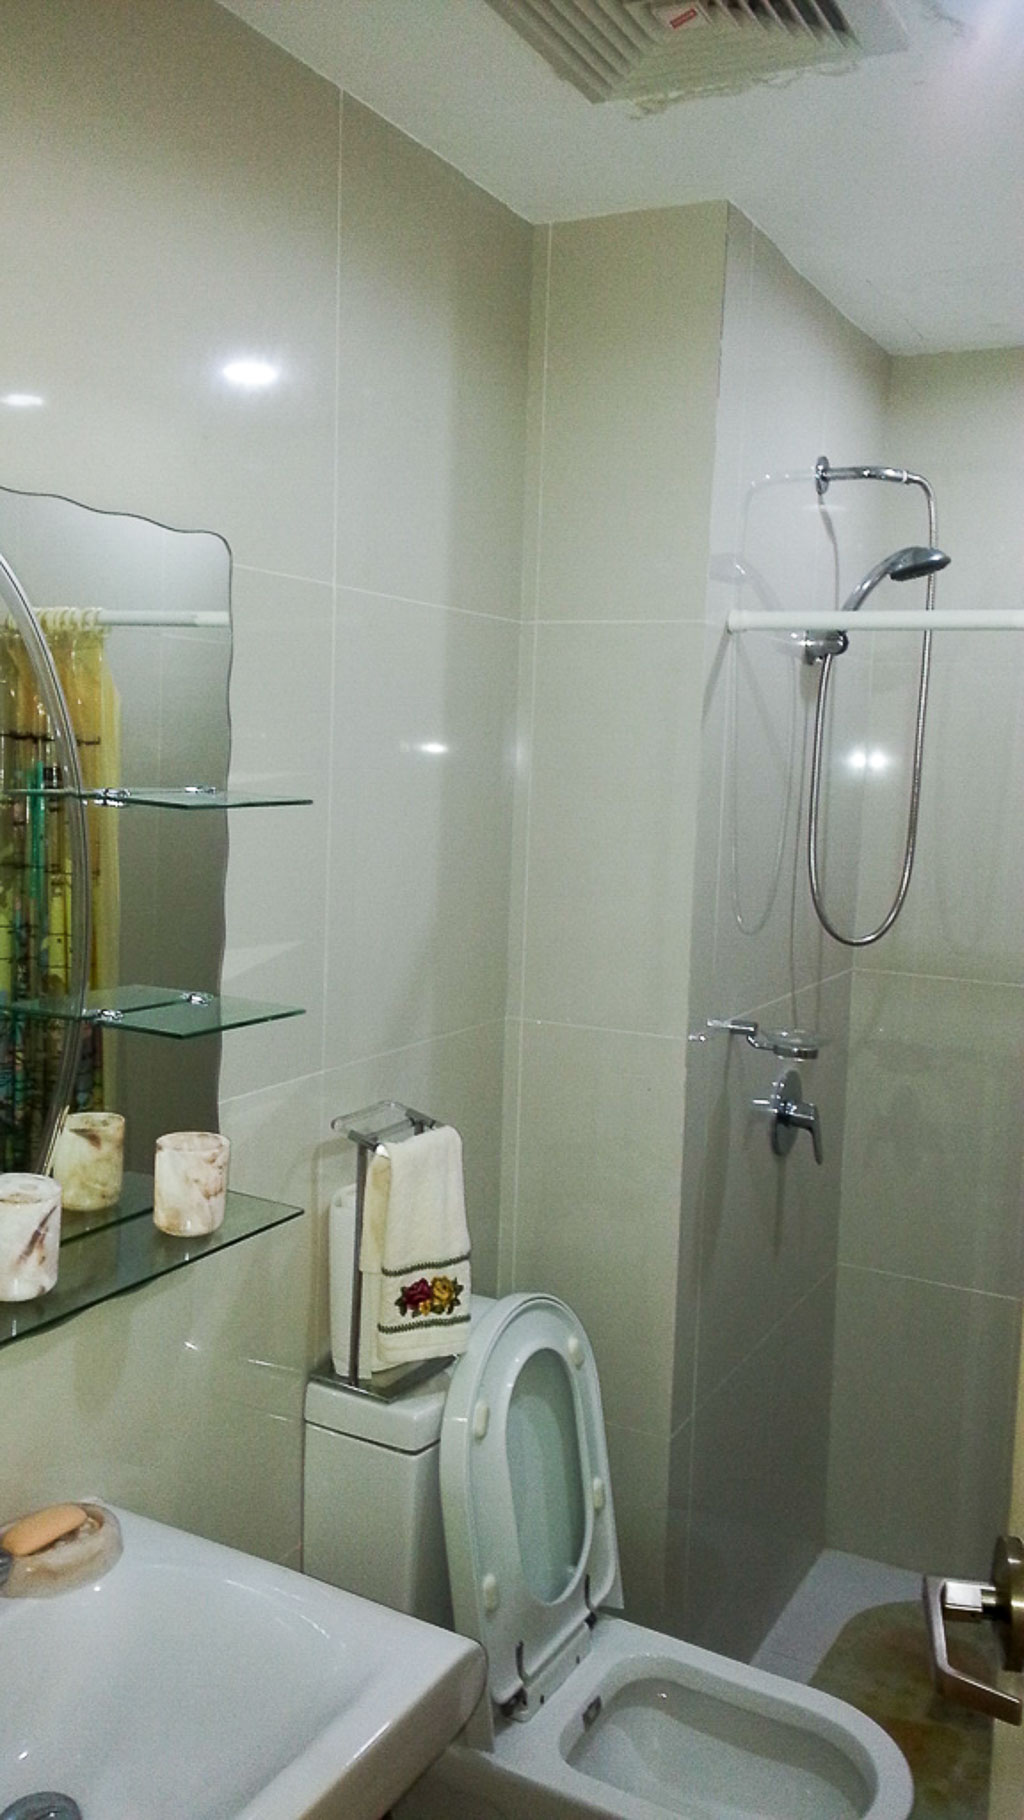 3 Bedroom Condo for Rent in Cebu City